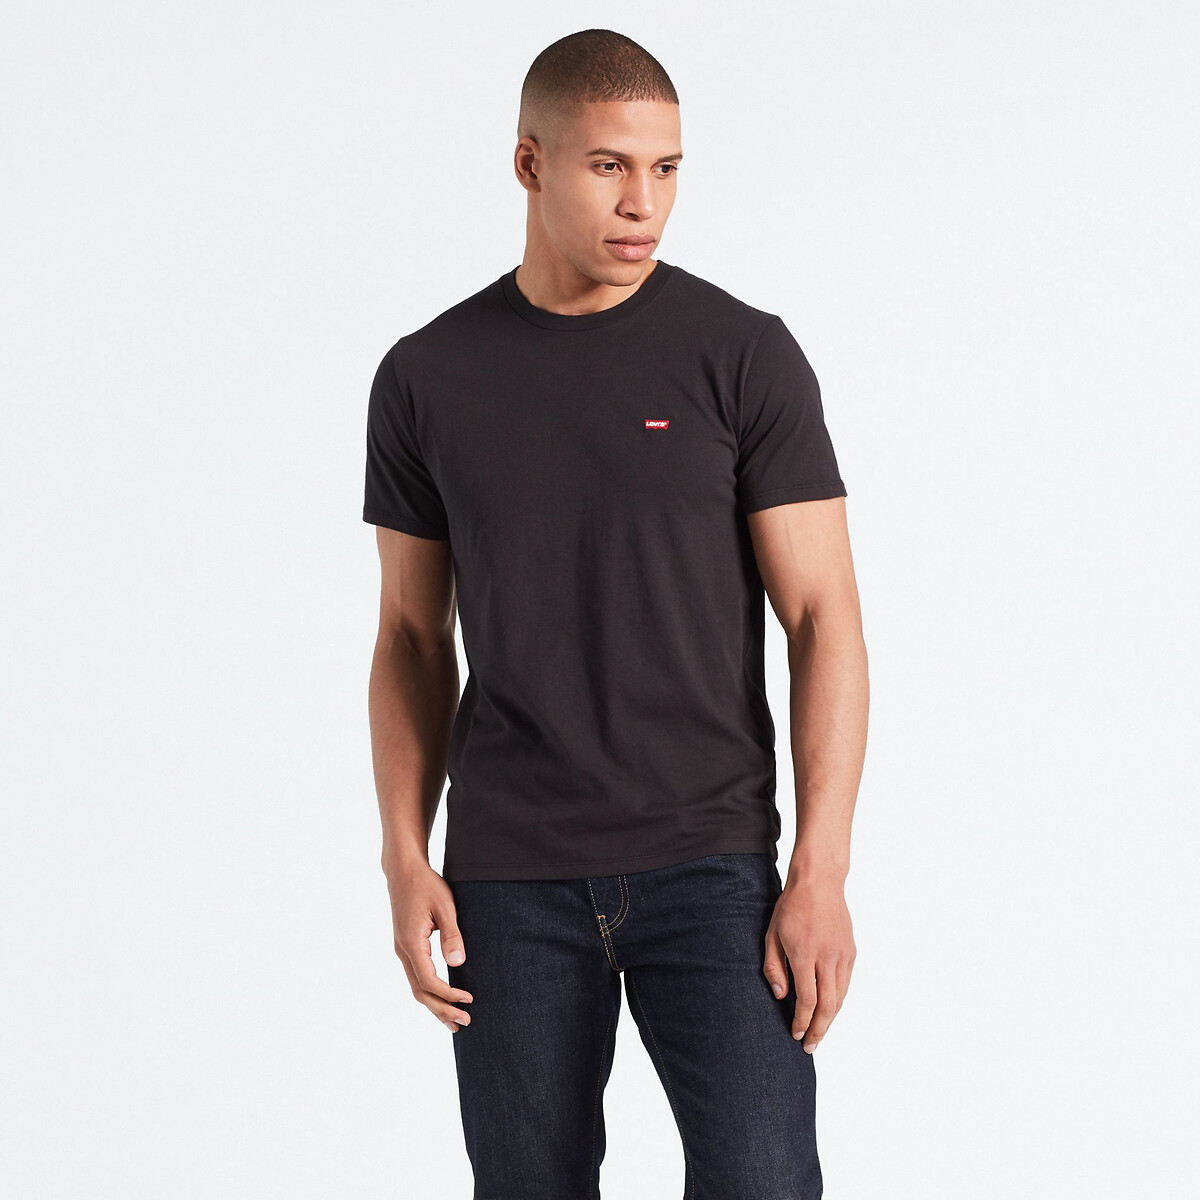 Cotton crew neck t-shirt with short sleeves, black, Levi's | La Redoute